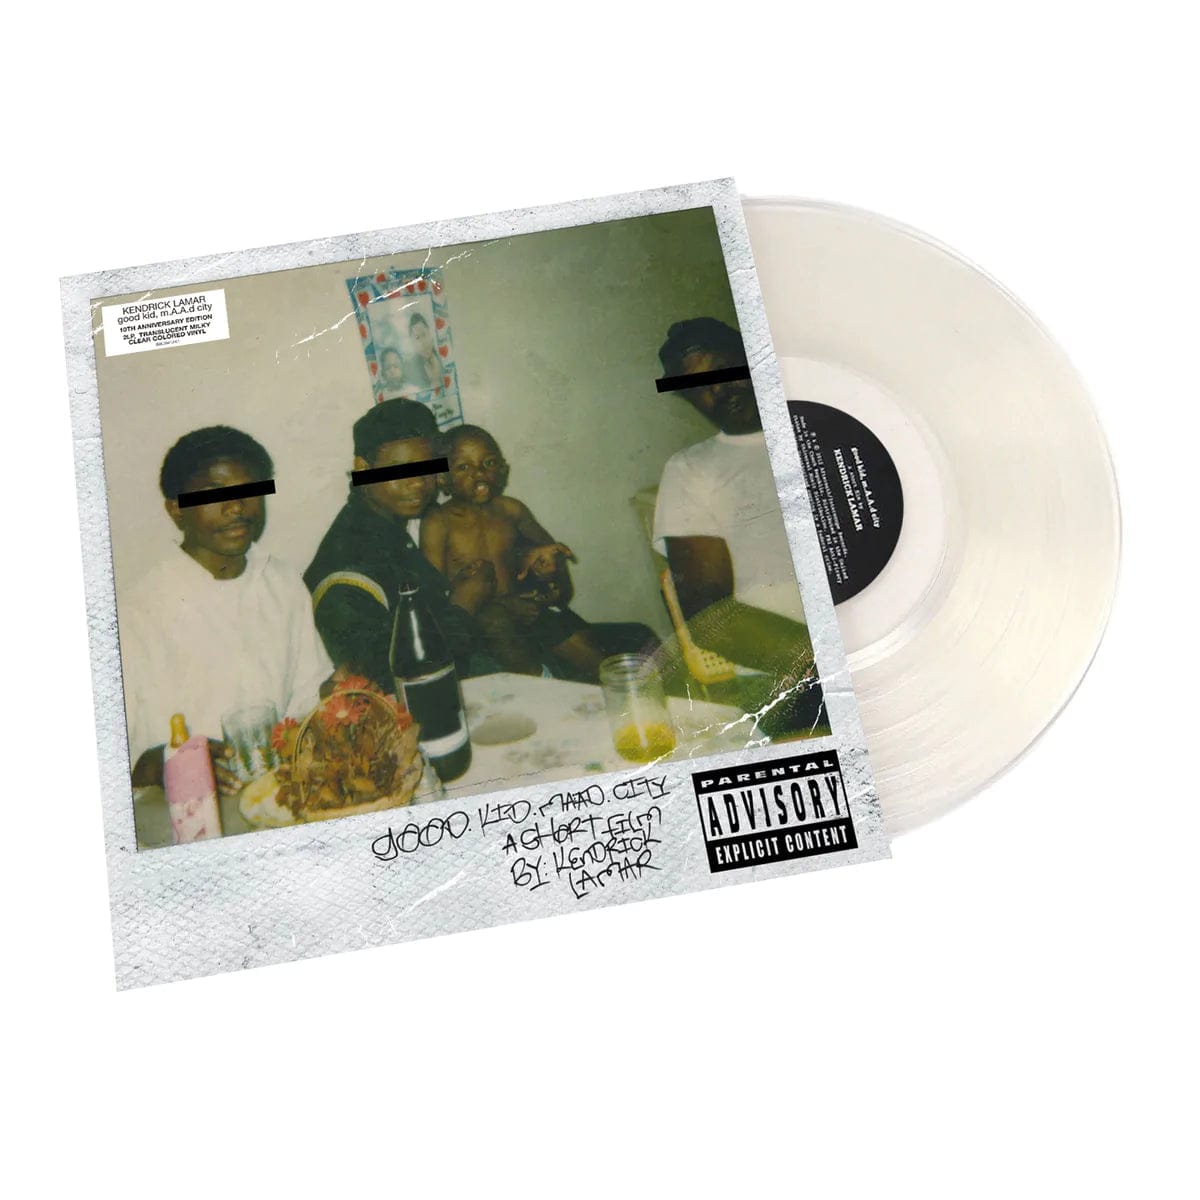 Lamar, Kendrick - Good Kid MAAD City, 10th Anniversary Edition (Clear Vinyl) - Third Eye